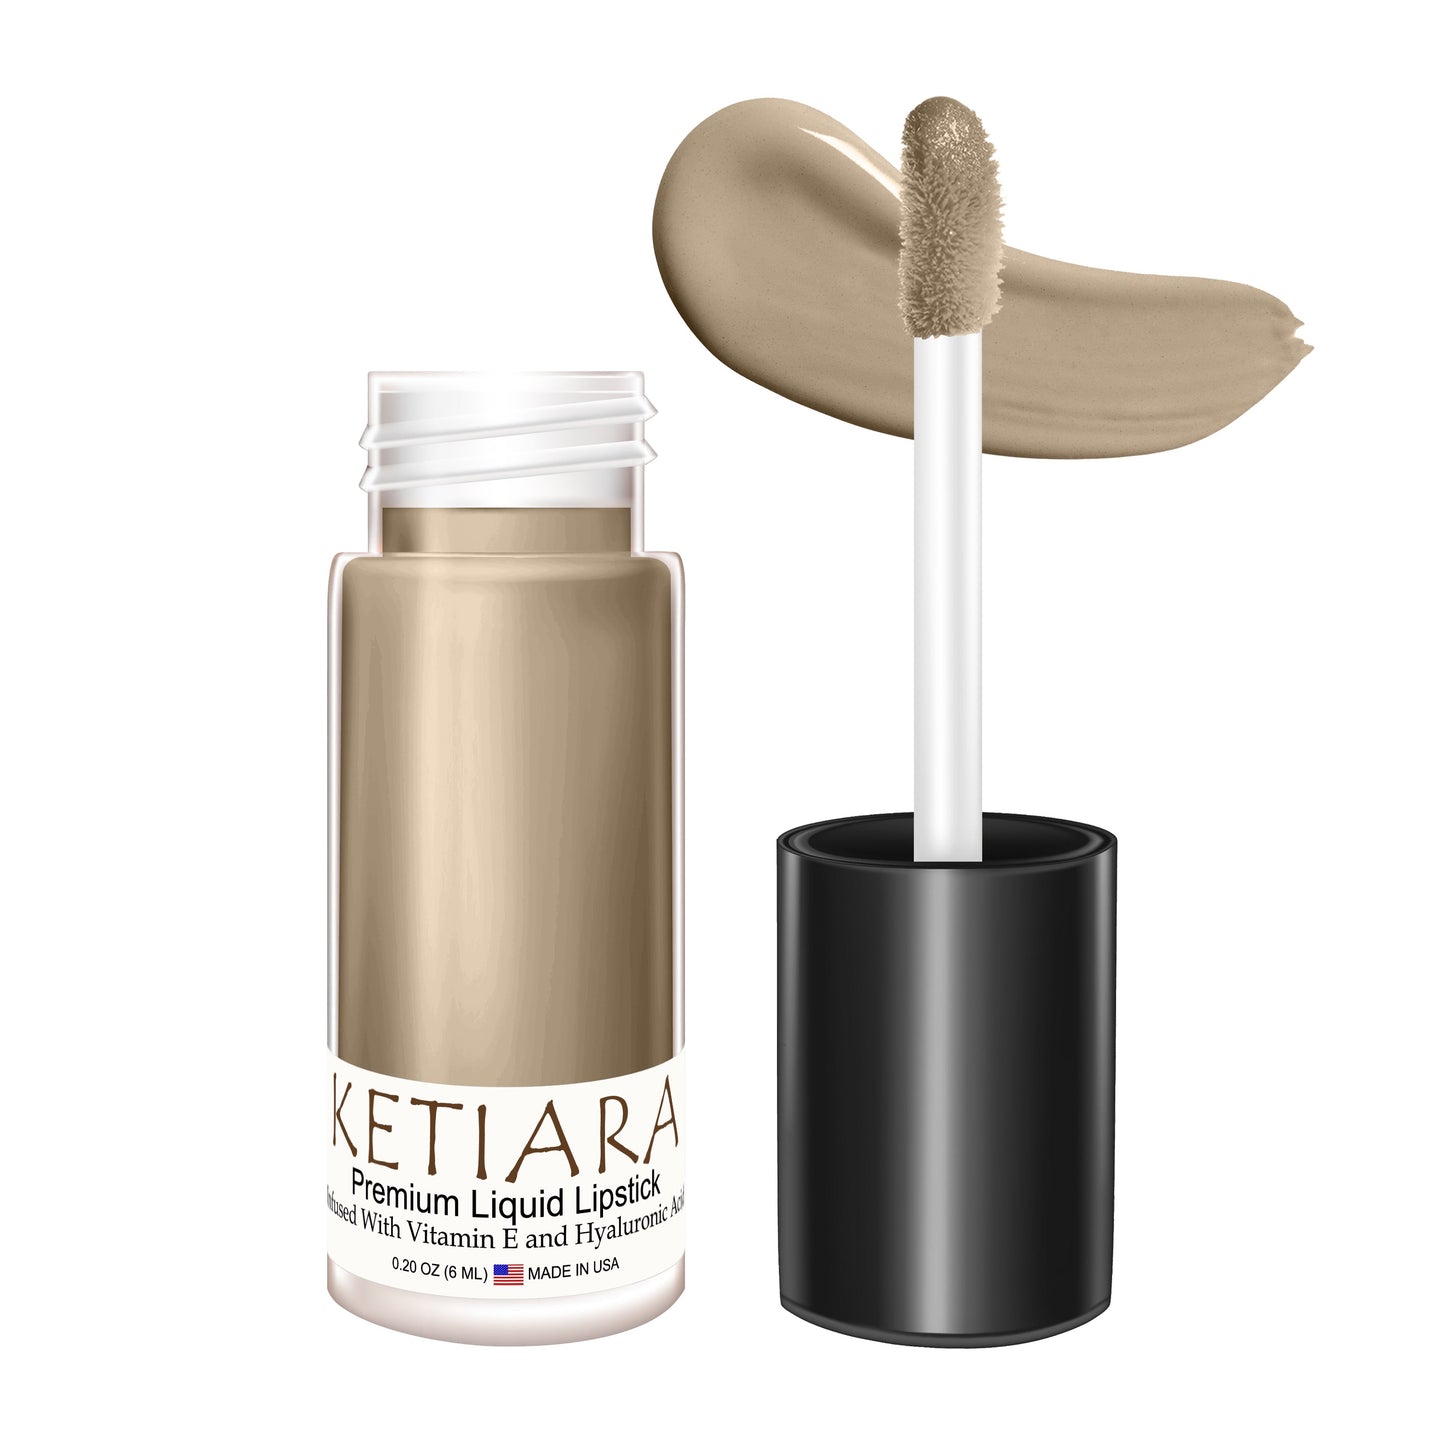 Ketiara Box Dye Smudge Proof Liquid Lipstick Infused With Vitamin E, 6 ml